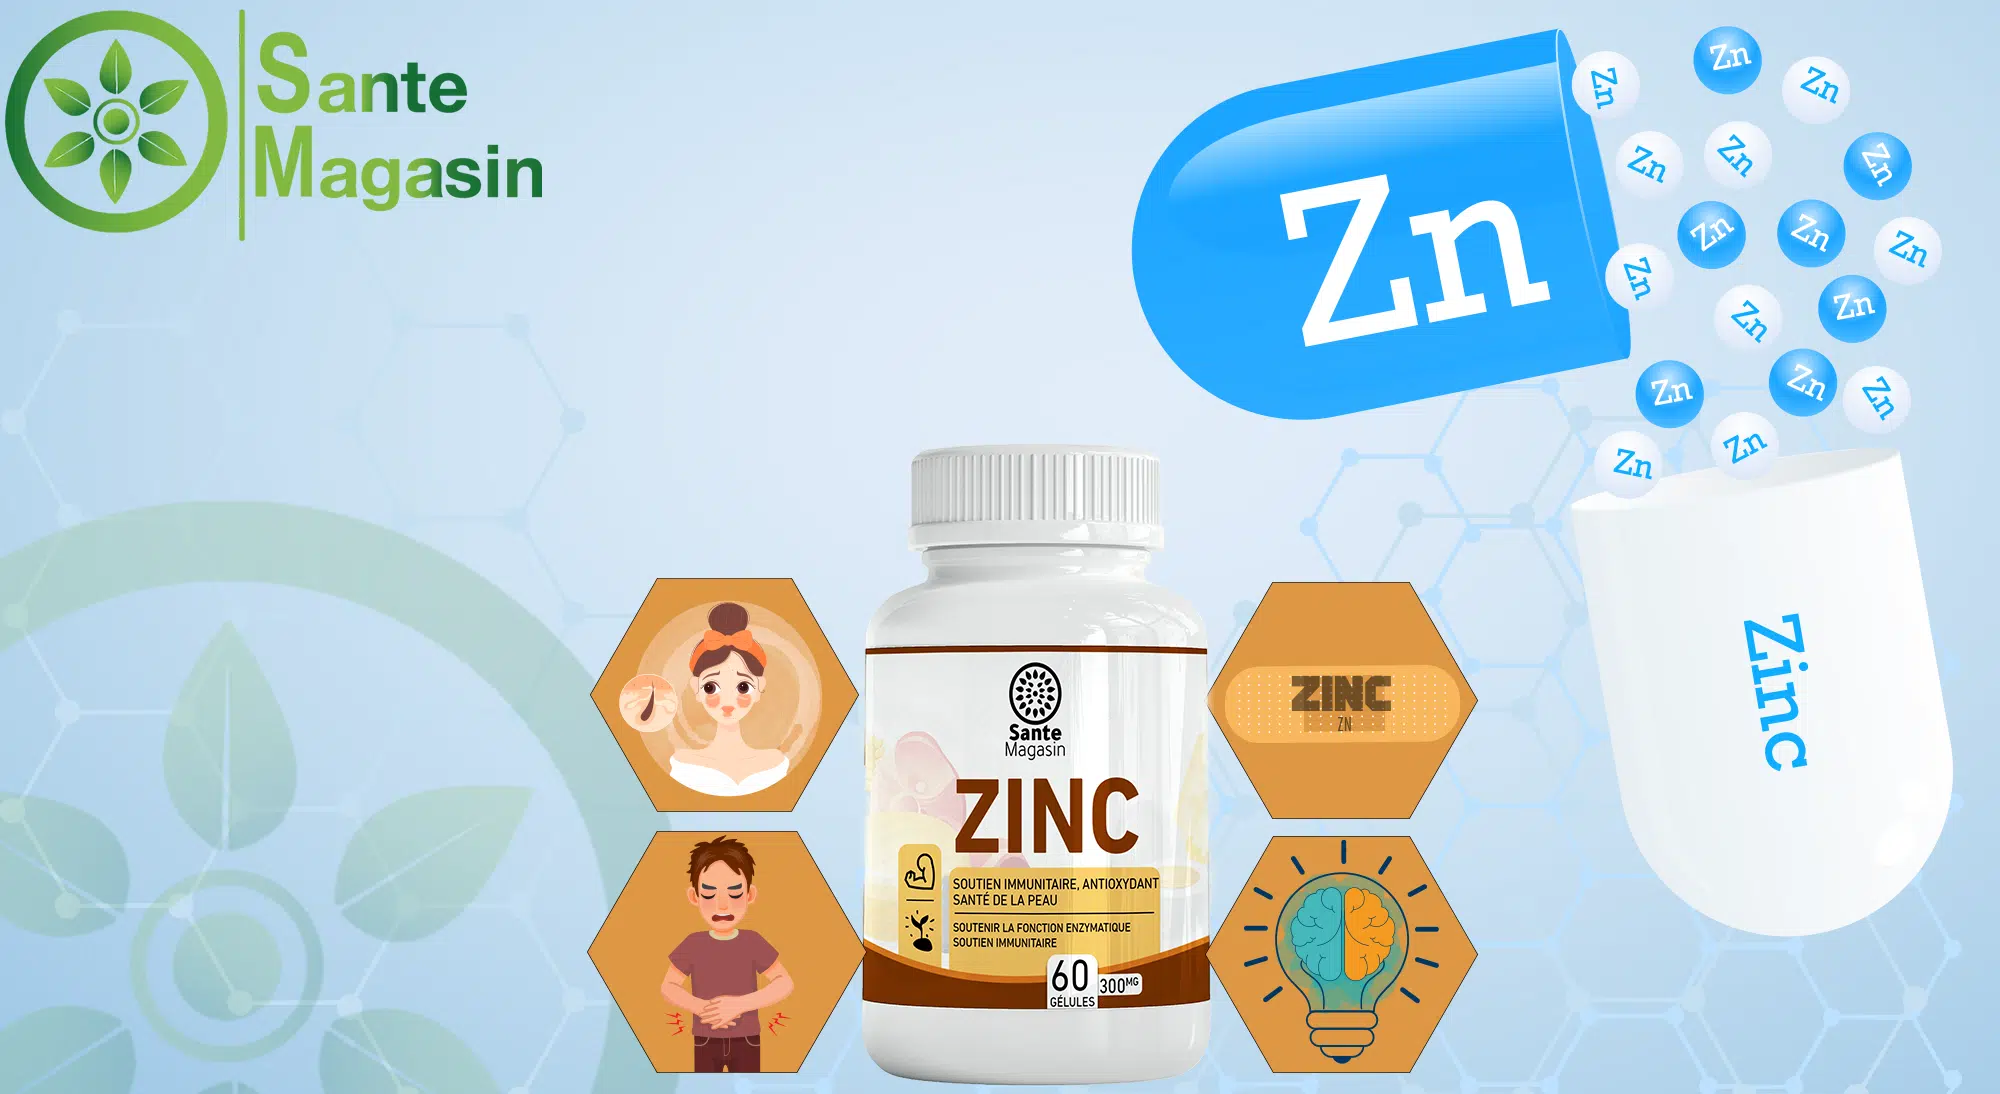 zinc-فوائد الزنك-الزنك-zinc prix maroc-زنك-الزنك للجسم-فوائد الزنك للرجال-zinc prix-zinc maroc-فوائد الزنك للمرأة-فيتامين الزنك-فوائد الزنك للجسم
